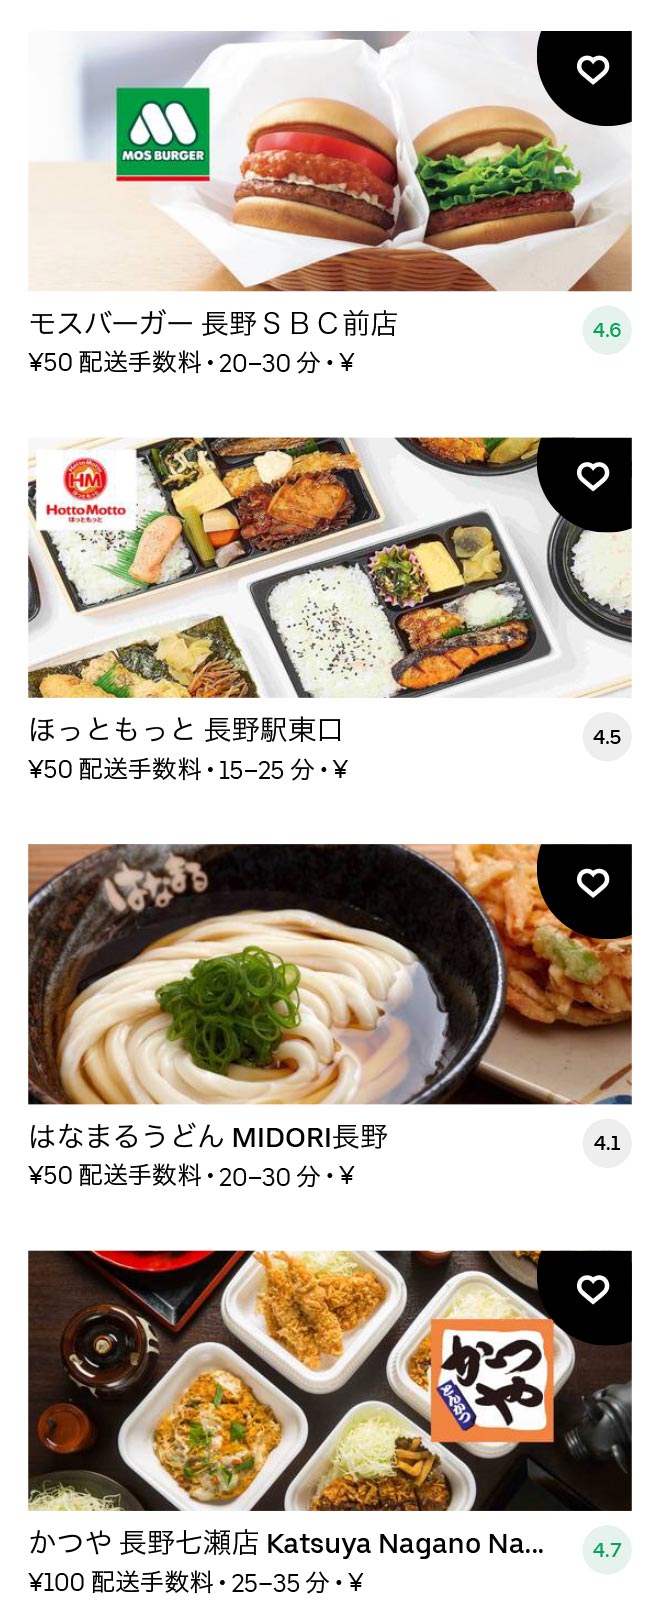 Nagano menu 2011 02